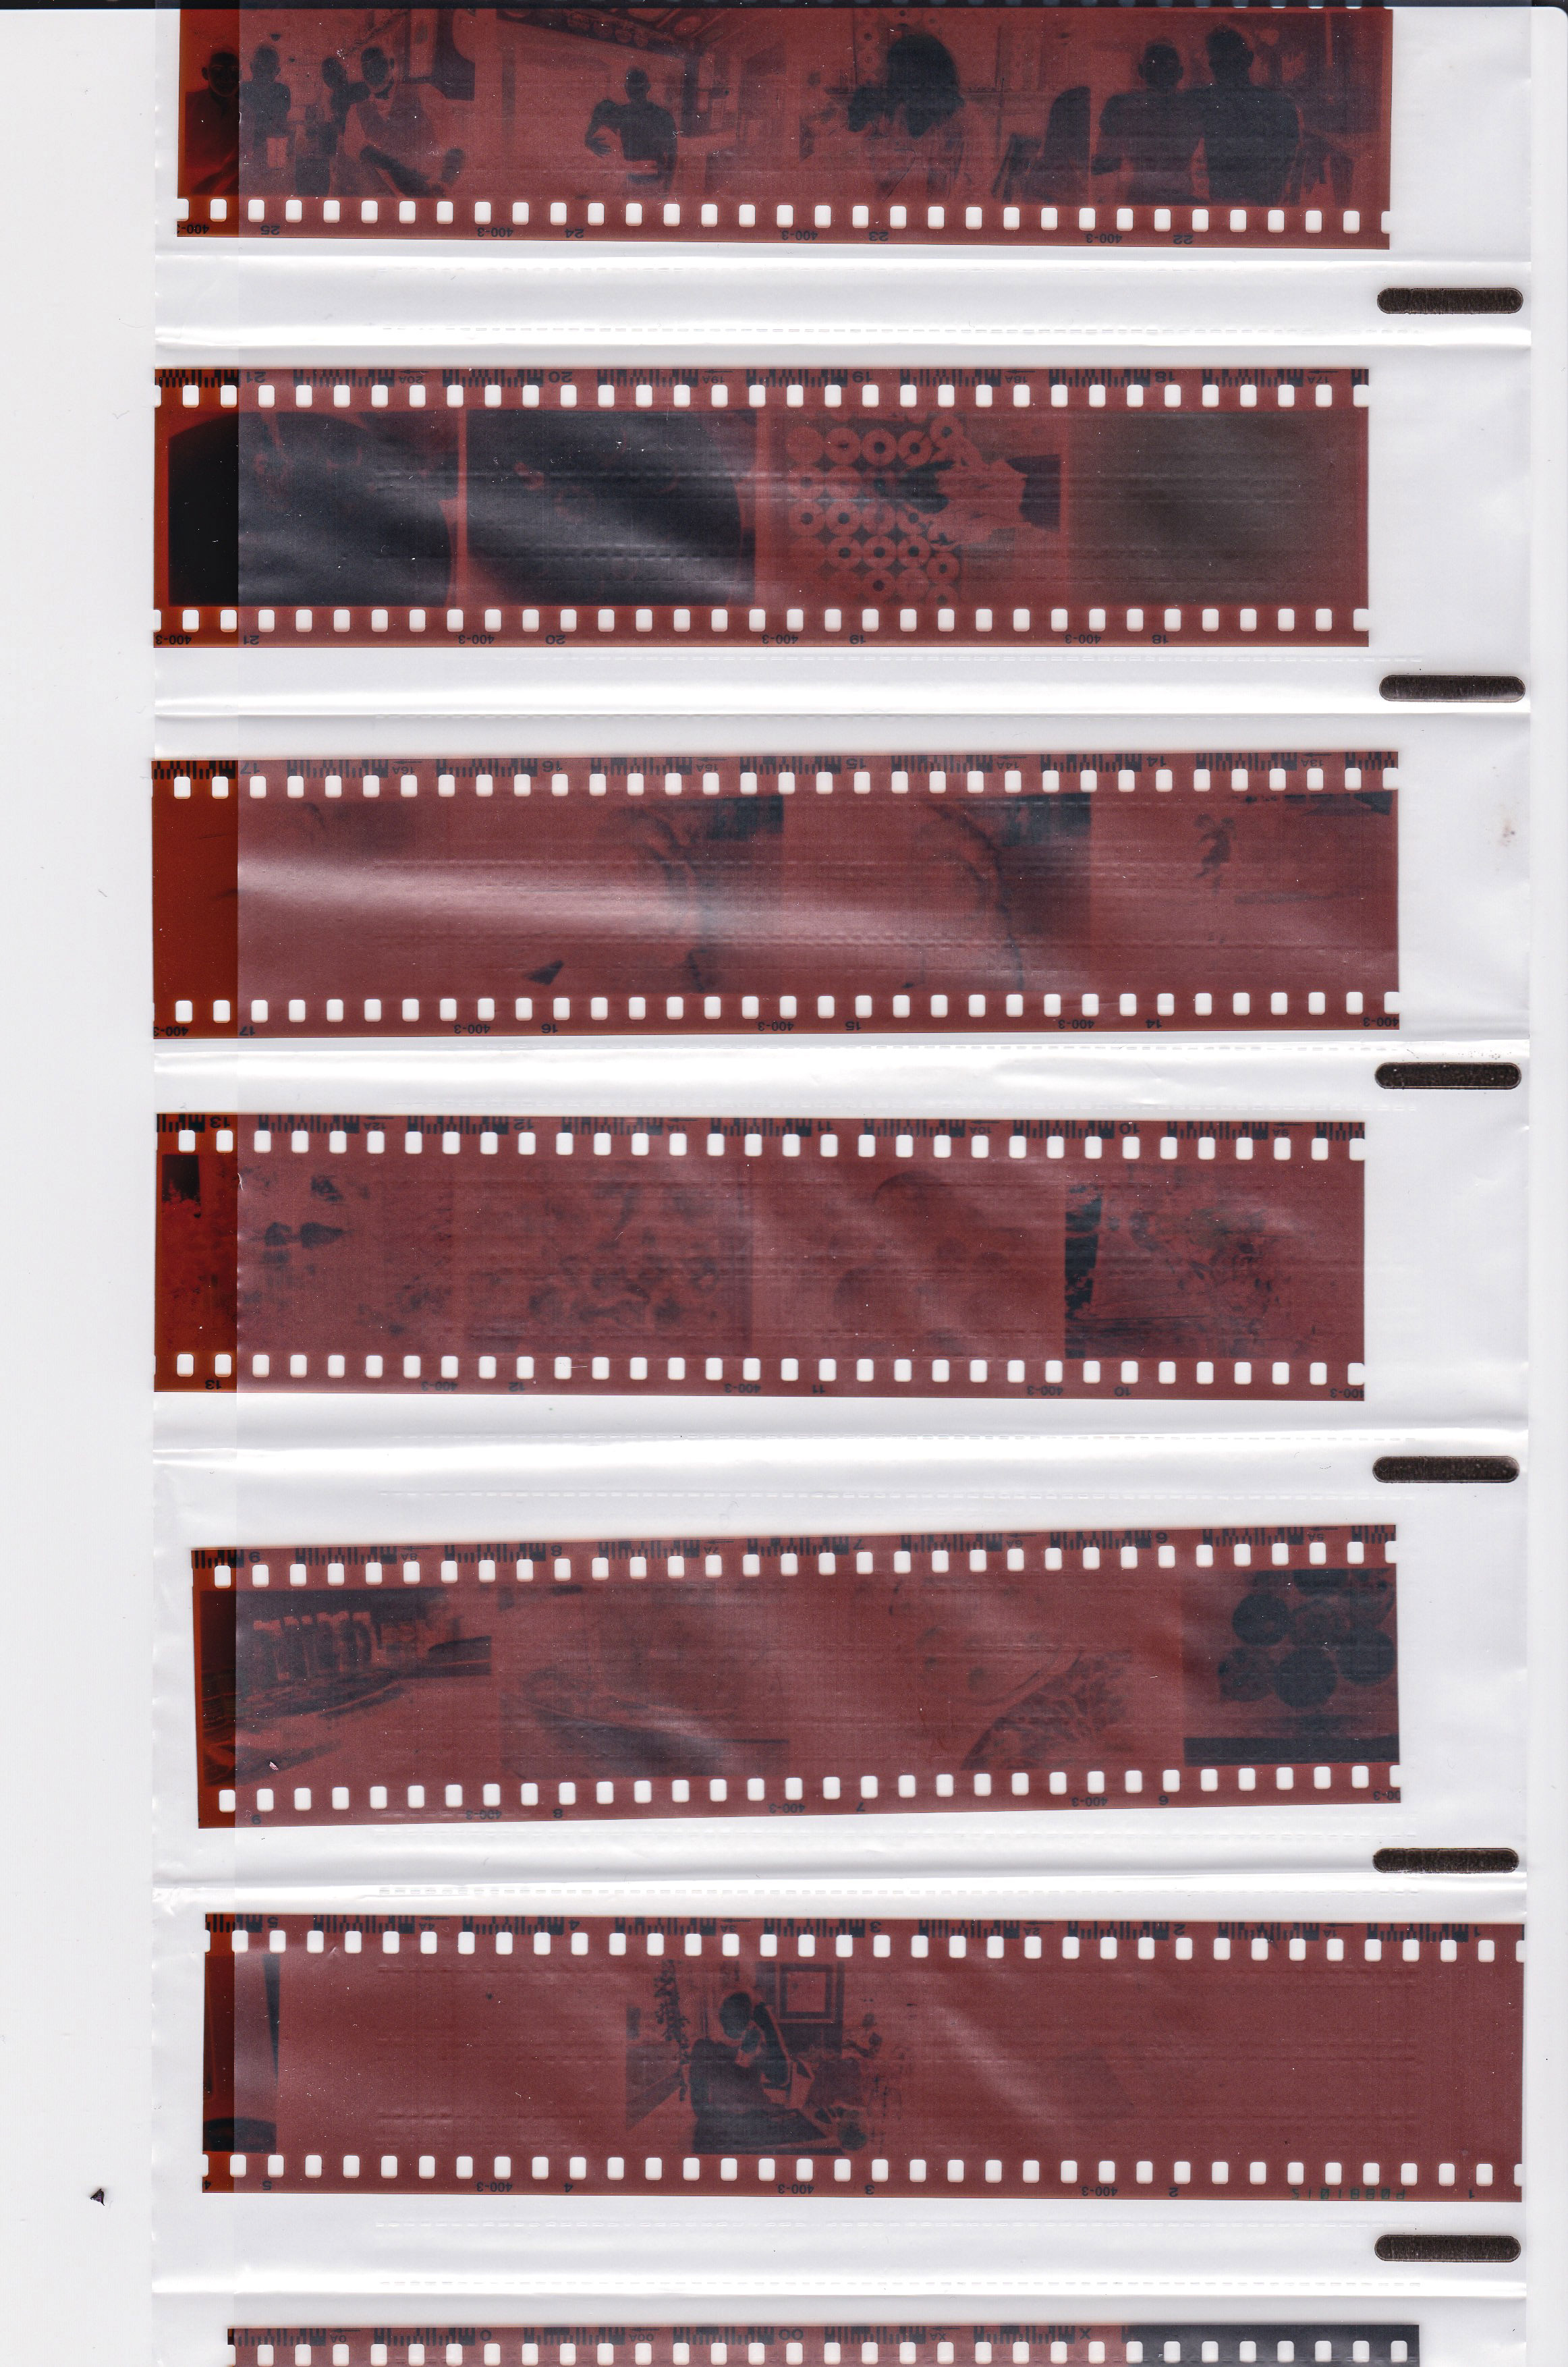 film negative